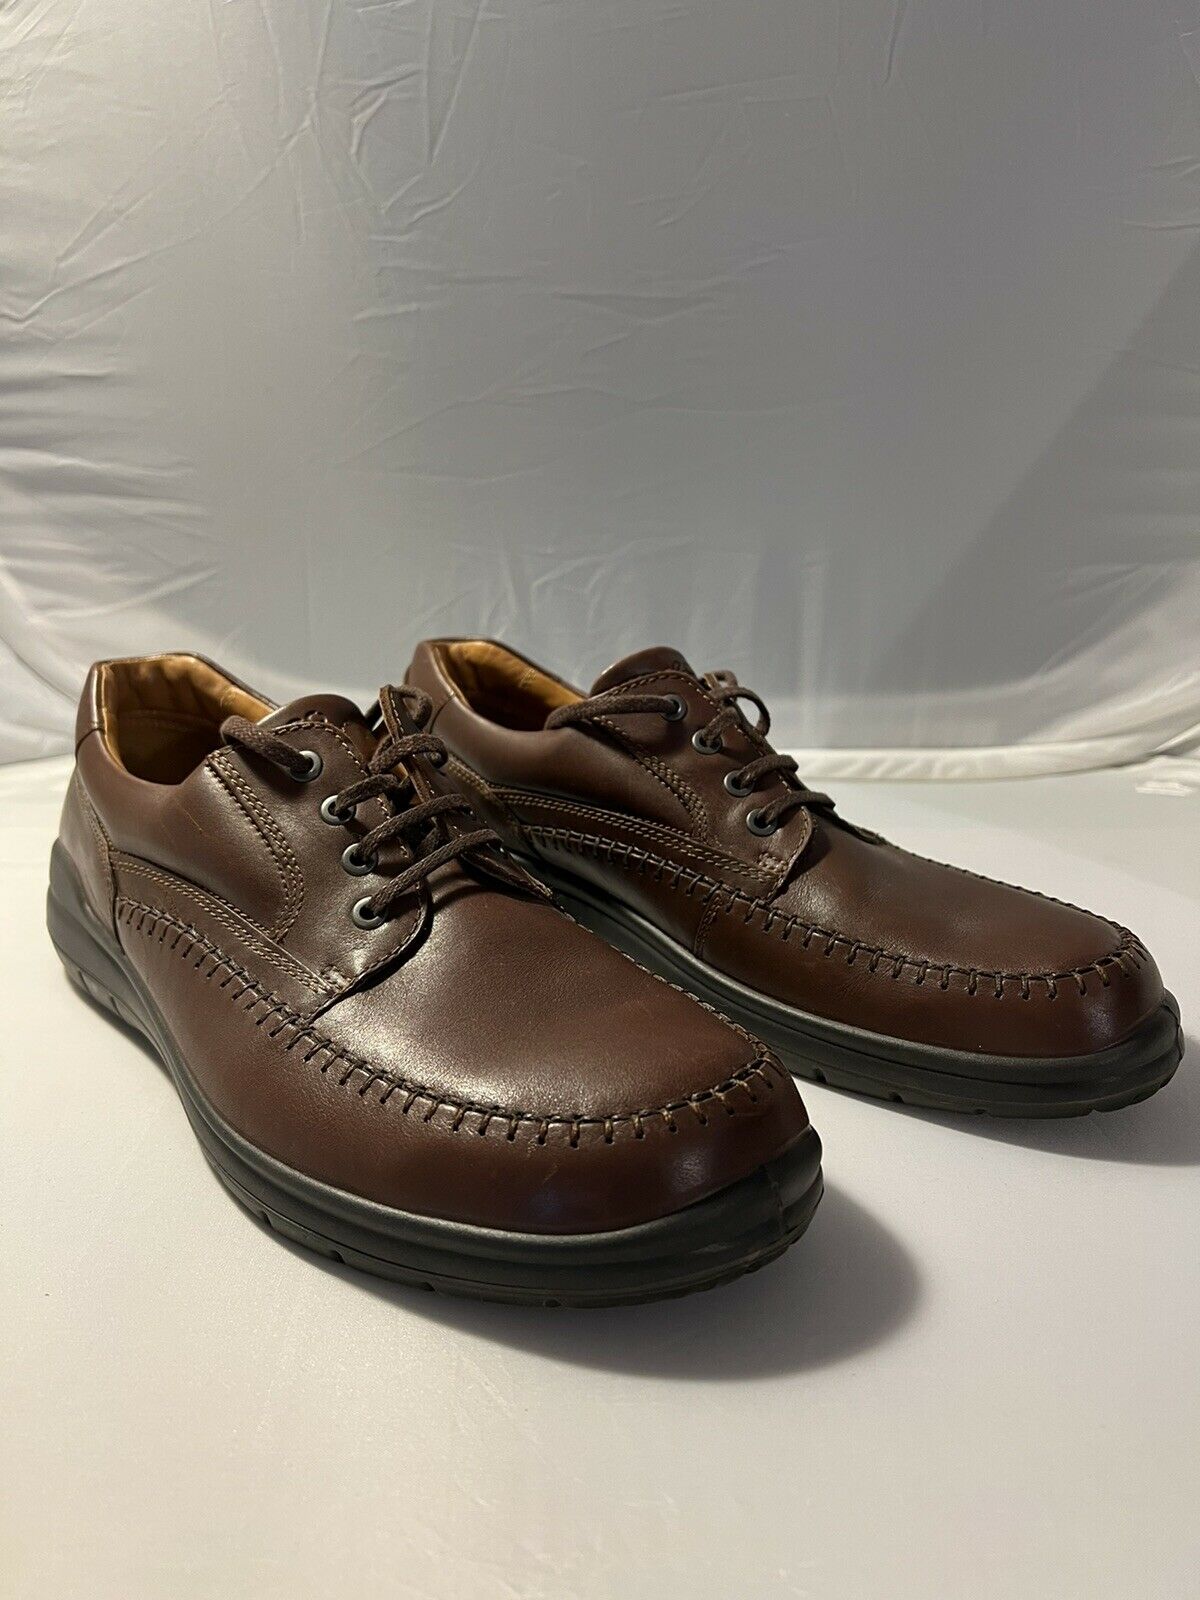 Ecco Men's Brown Leather Moc-Toe Lace-Up Casual Shoes Size EUR 47 US 12.5 -13